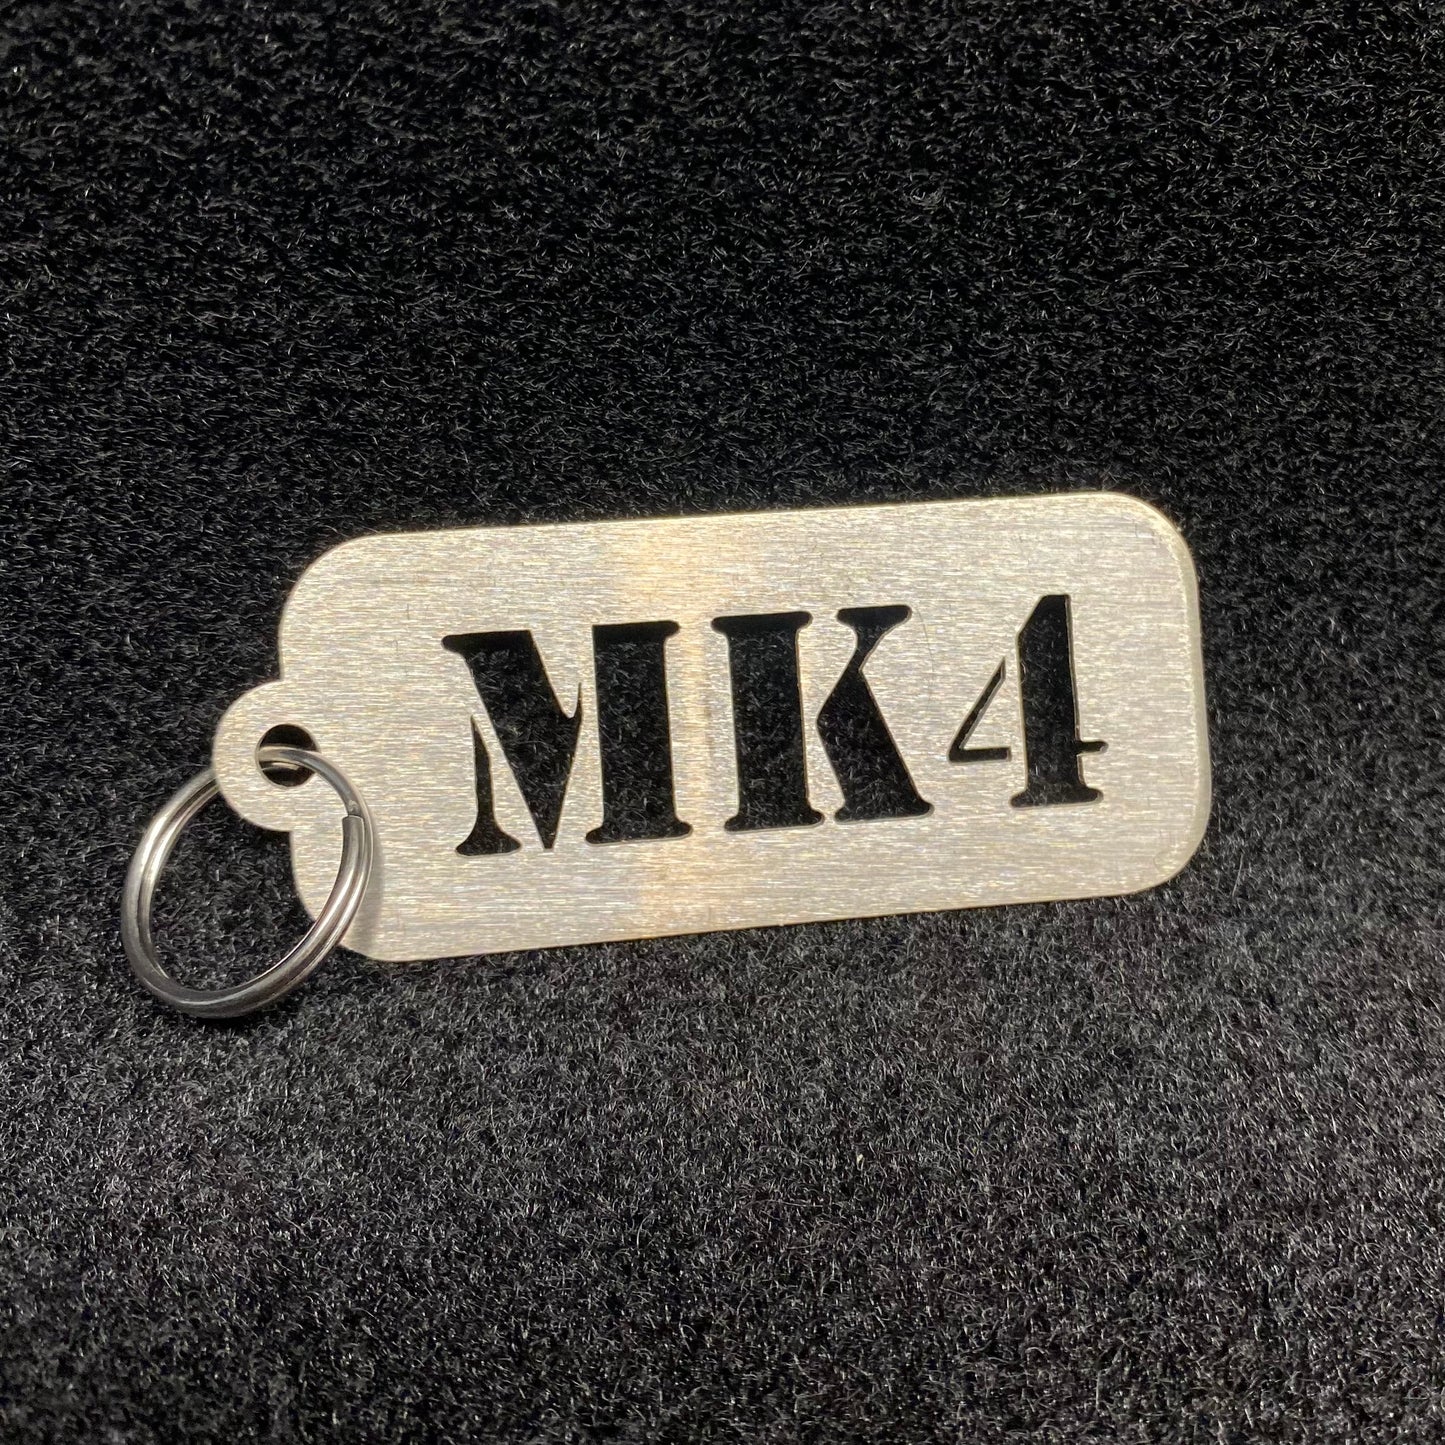 VW Stainless Keychains - (MK) Mark 1-8